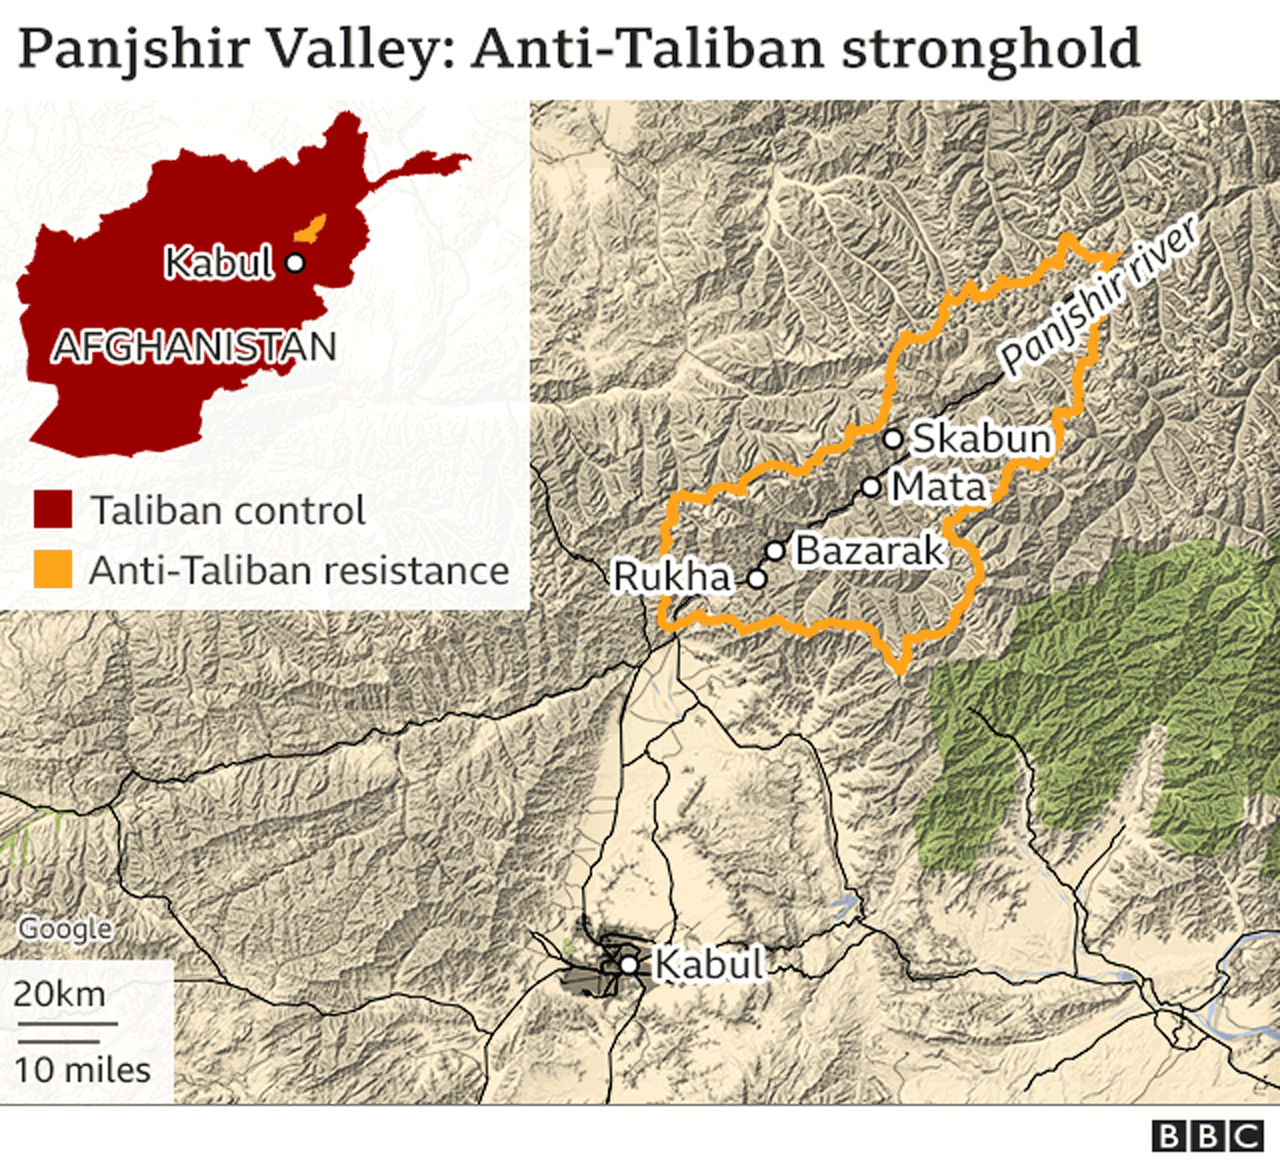 https://ichef.bbci.co.uk/news/976/cpsprodpb/AD7C/production/_120221444_afghanistan_panjshir_terrain_roads_640x2-nc.png